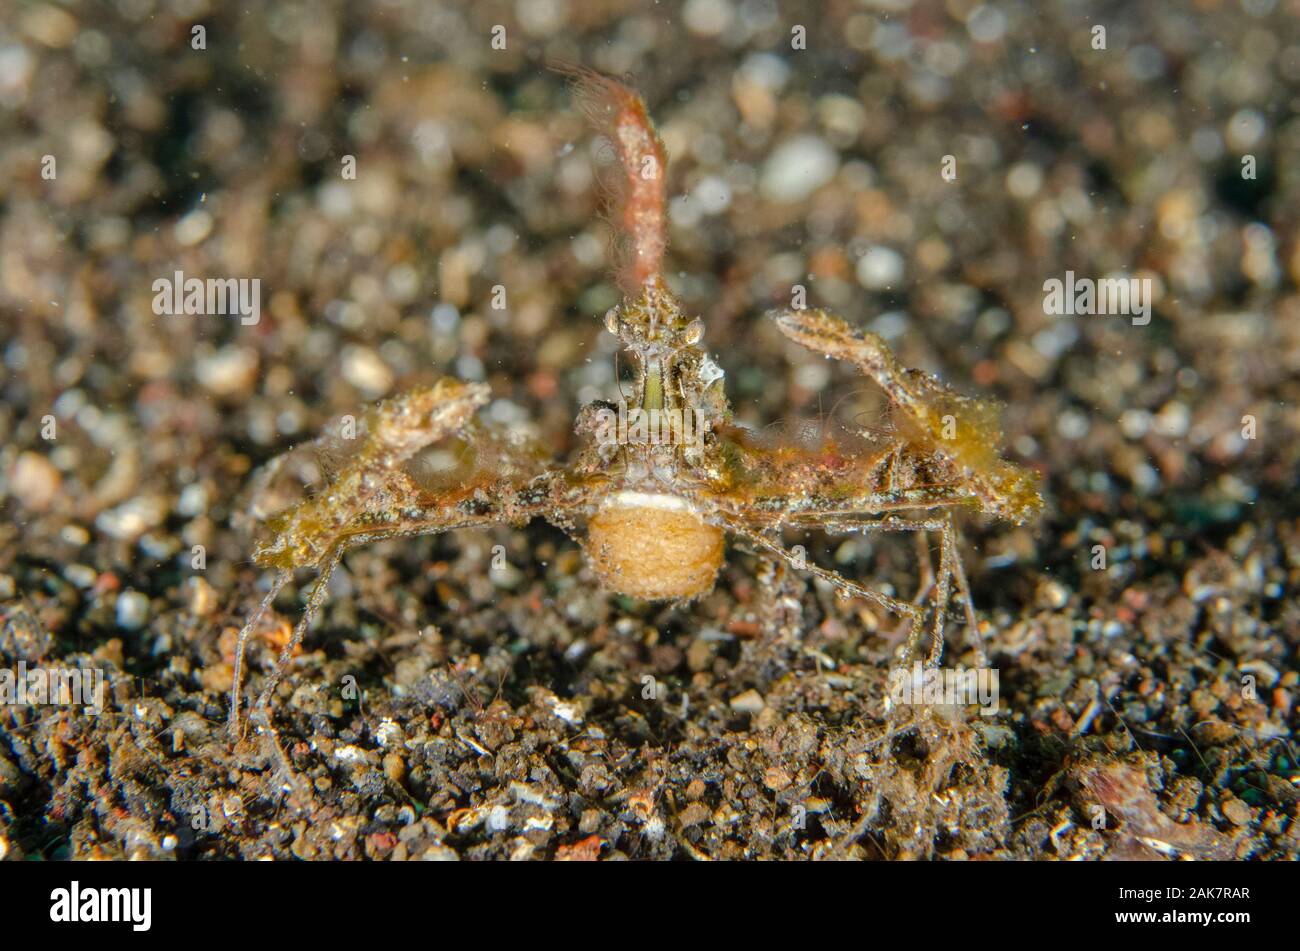 Decorator Crab with eggs, Majoidea Superfamily, Decapoda Order, Monkey Reef dive site, Tulamben, Bali, Indonesia, Indian Ocean Stock Photo